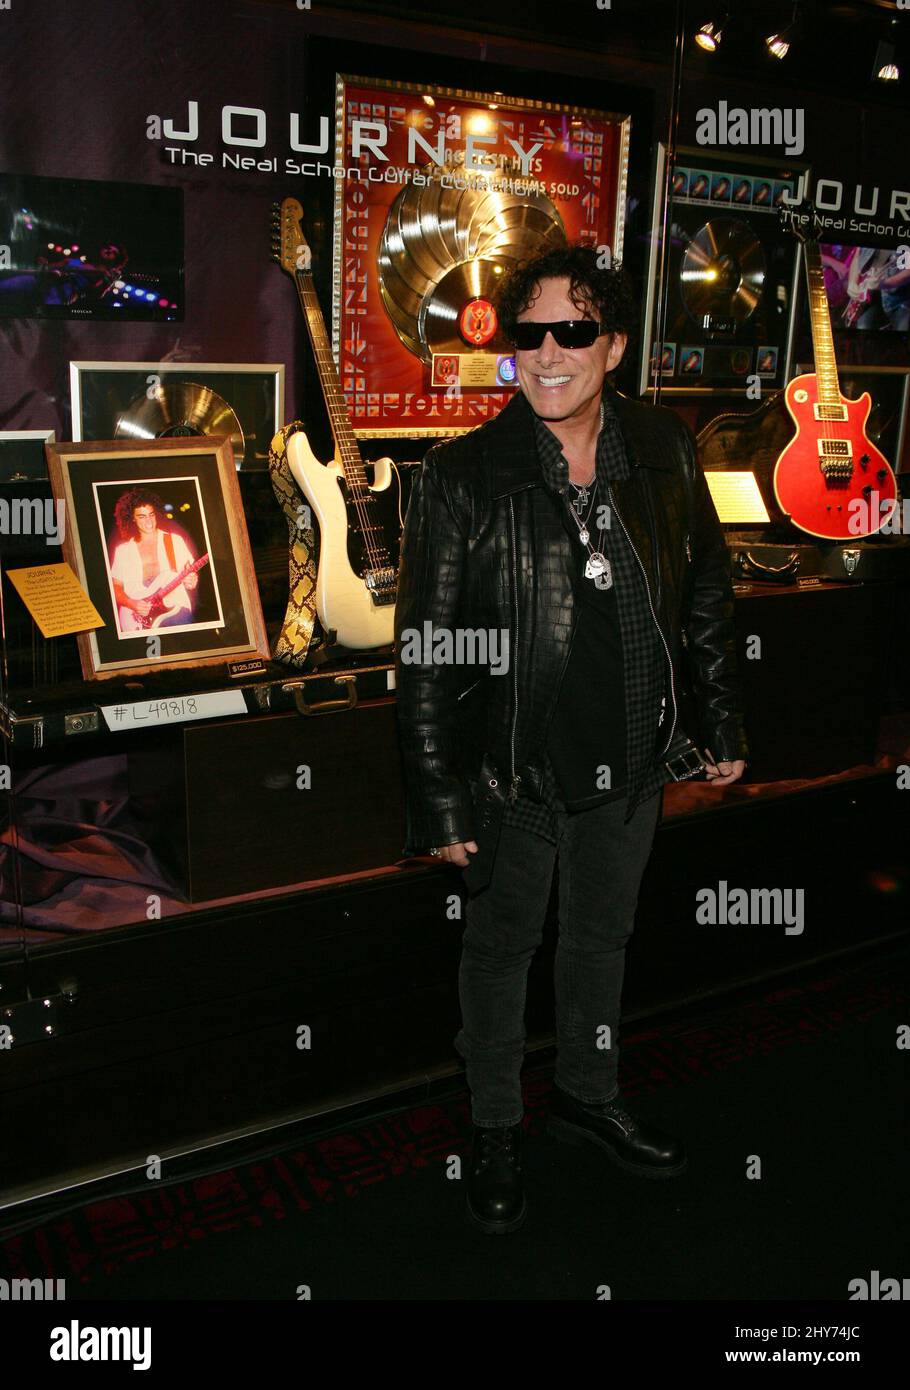 Neal Schon as Journey and Neal Schon unveil memorabilia cases At Hard Rock Hotel & Casino, Las Vegas. Stock Photo